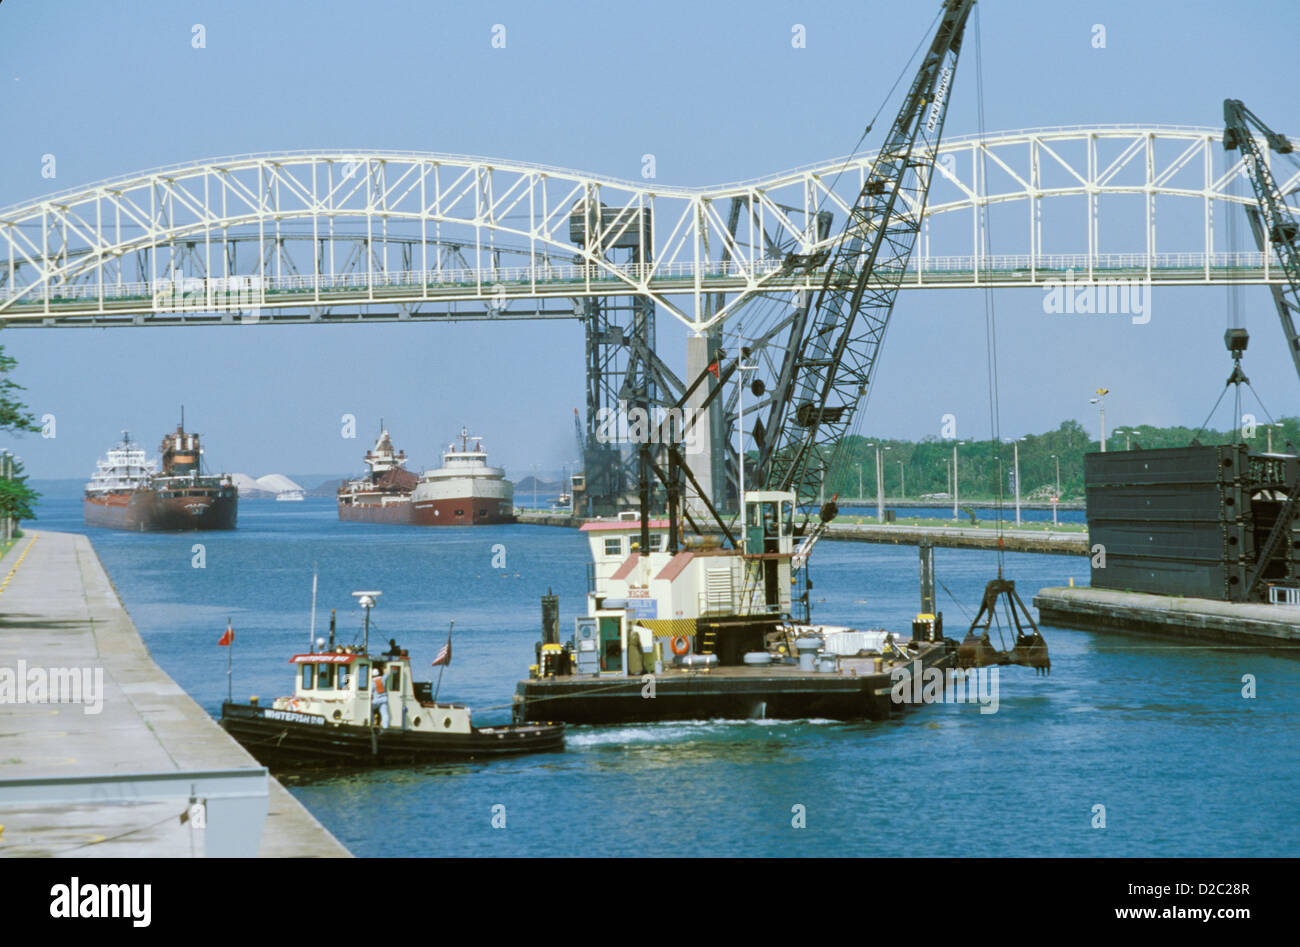 Edwin H International Bridge Sault Ste Marie MI Ship Postcard Gott Soo Locks 